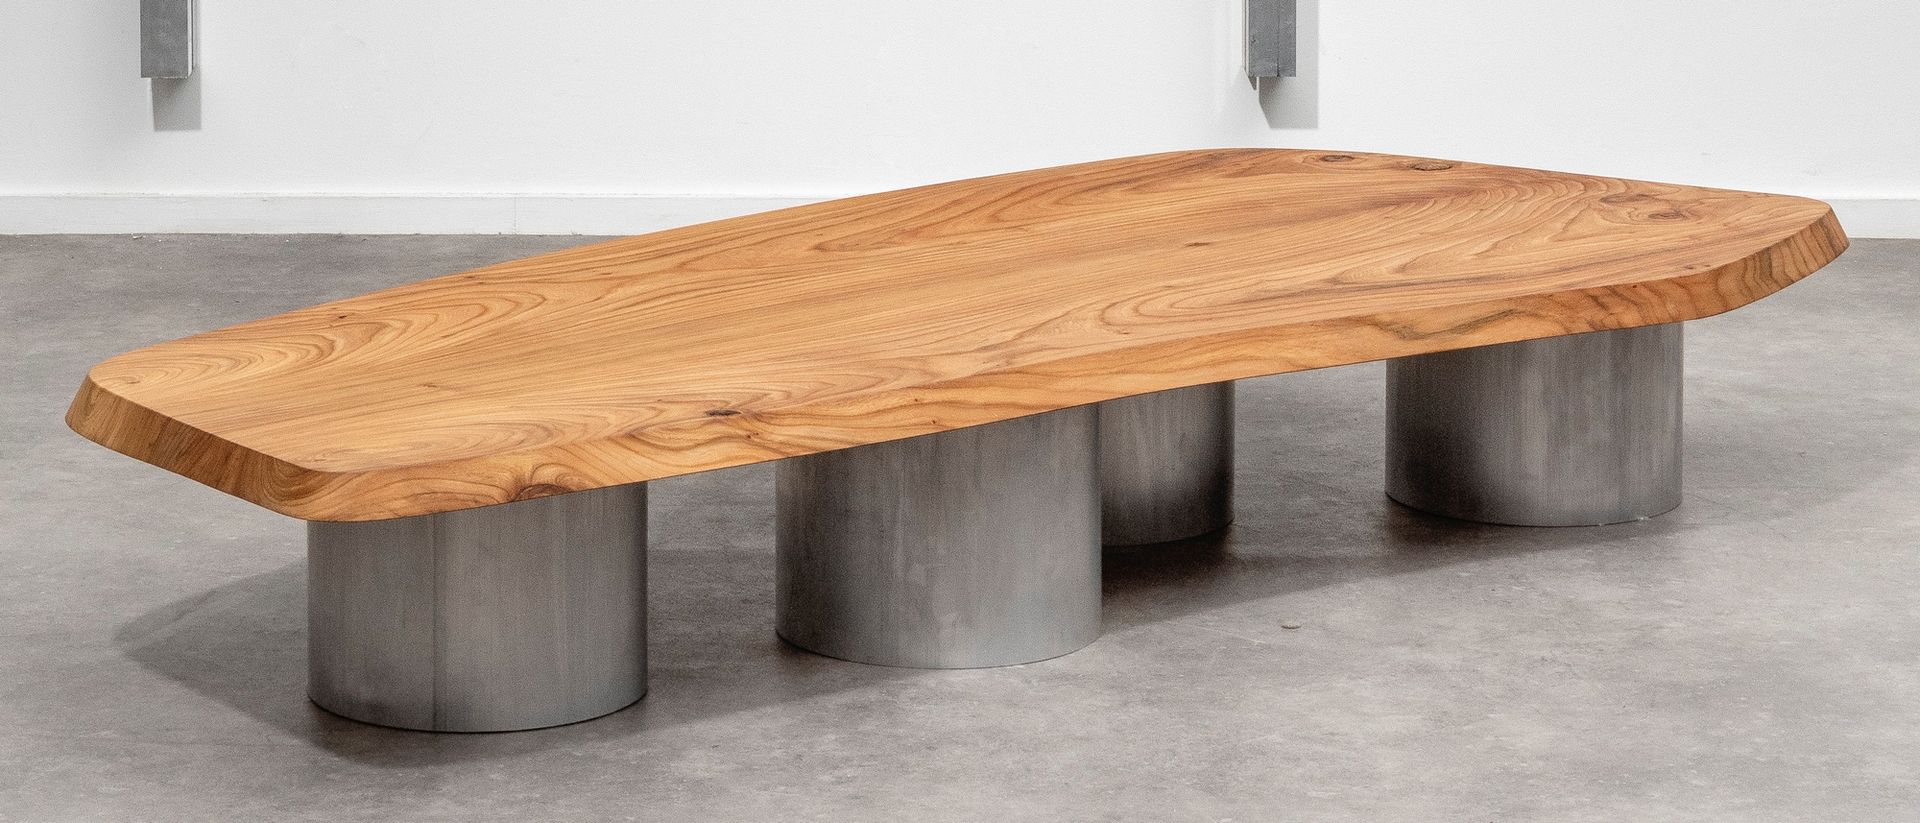 ATELIER CONSTANT 咖啡桌。实心榆木和铝。
沙龙塔法尔。铝制的Massief olm。
限量1/15。
H.29 cm W.195,5 cm D.&hellip;